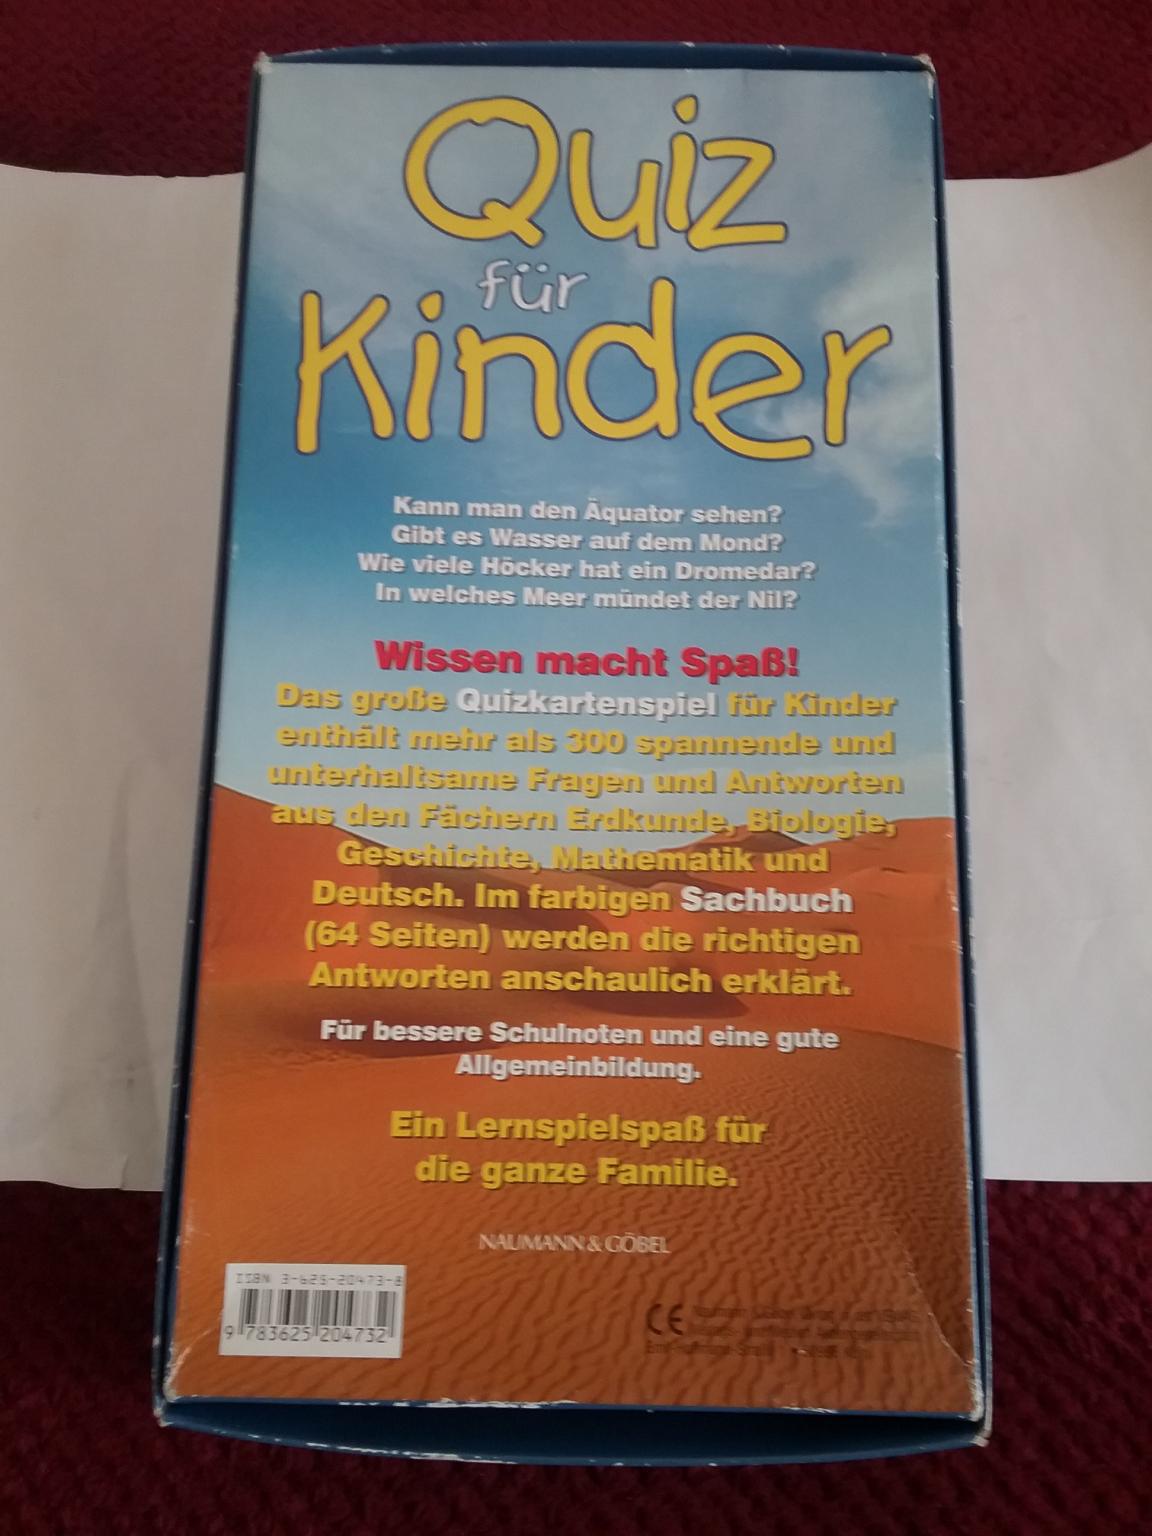 quiz für kinder in 73329 kuchen for €400 for sale  shpock